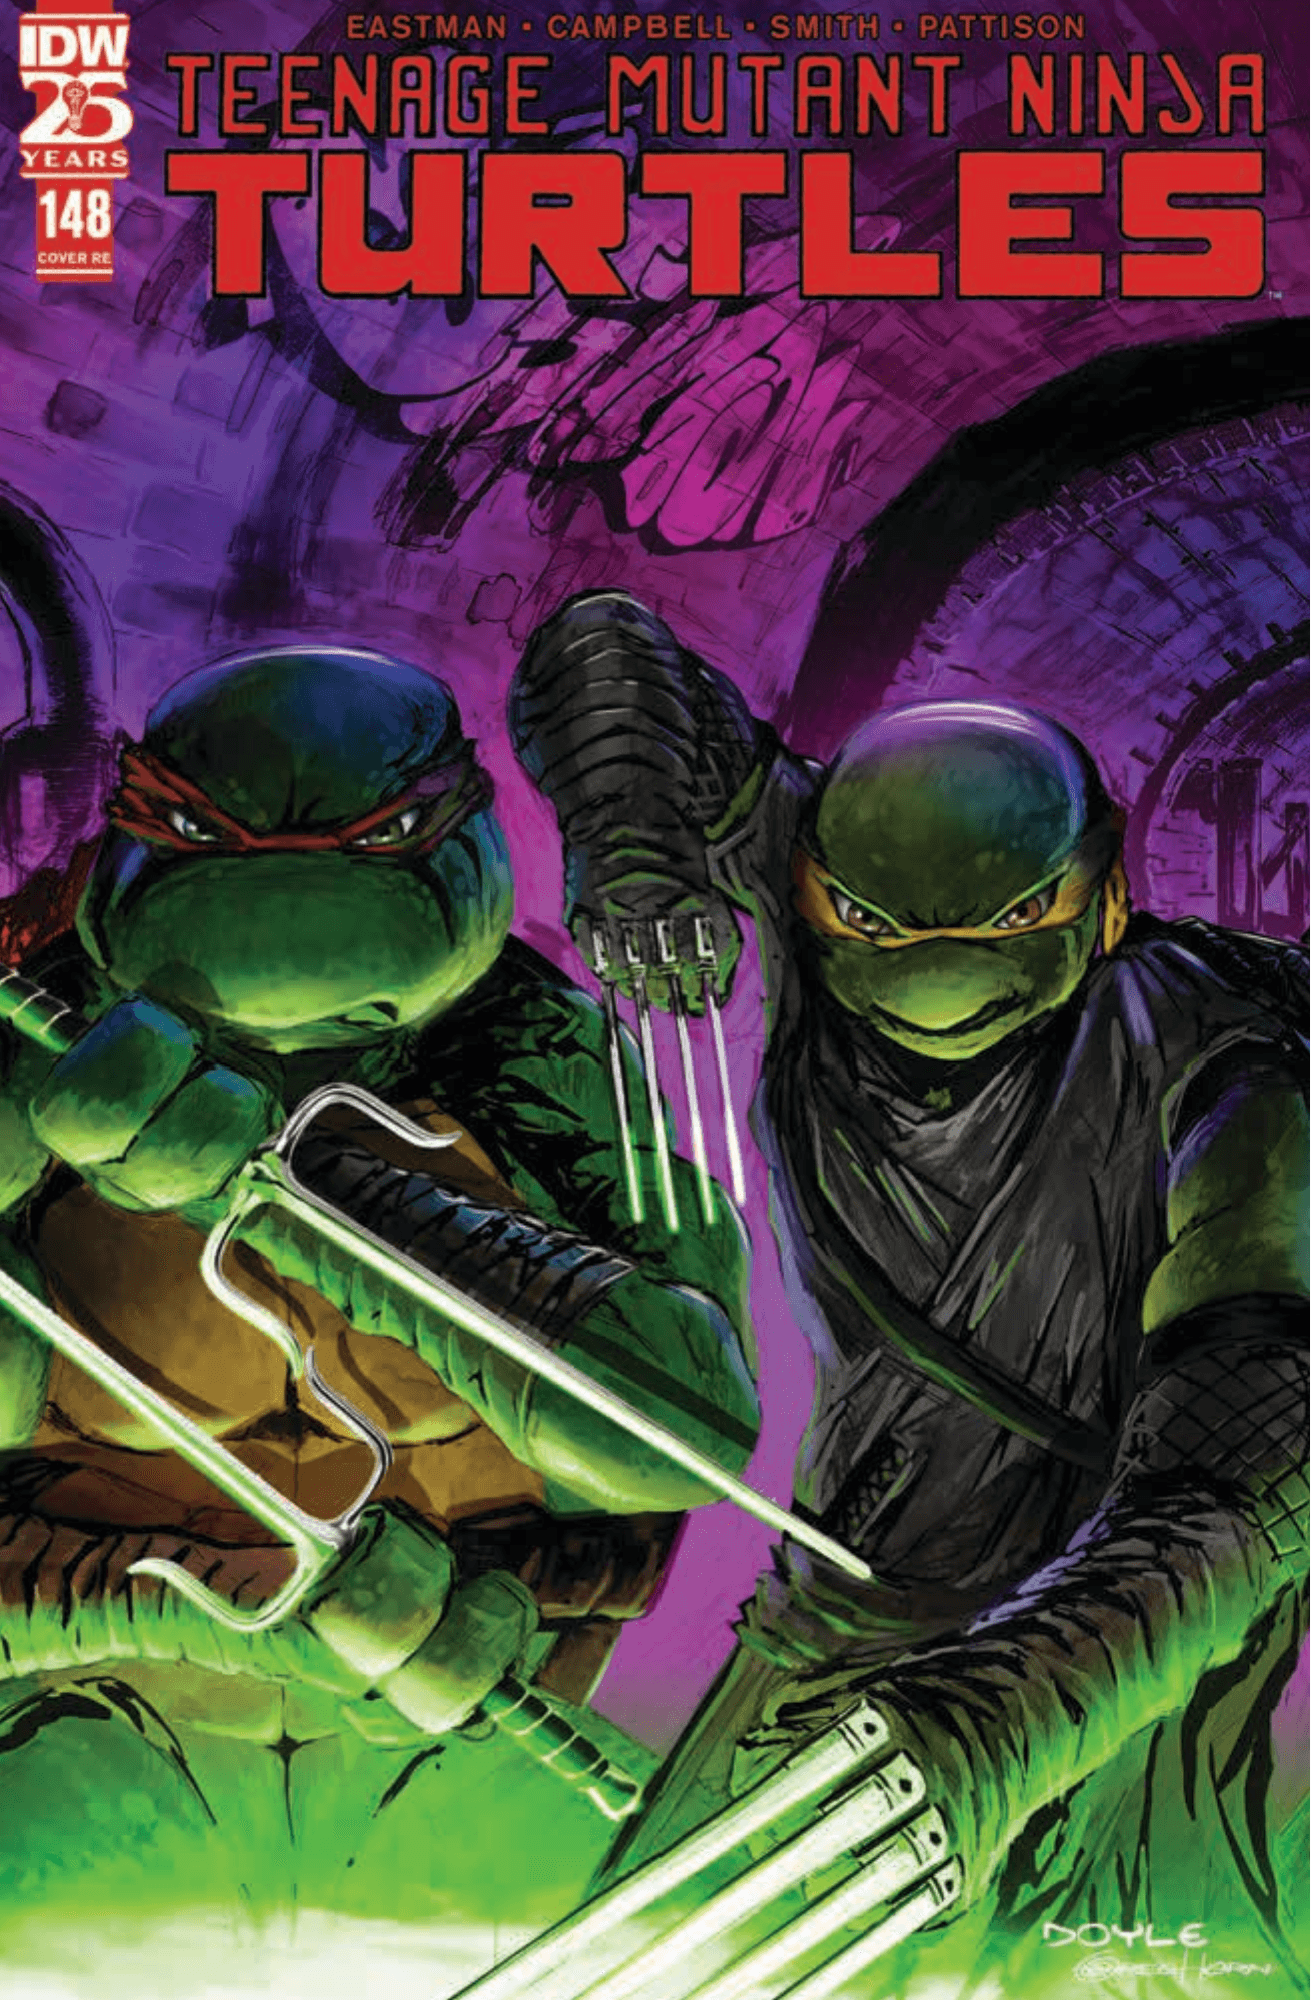 Teenage Mutant Ninja Turtles #148 - Lightning Comix Exclusive - Trade Dress - LIGHTNING COMIX